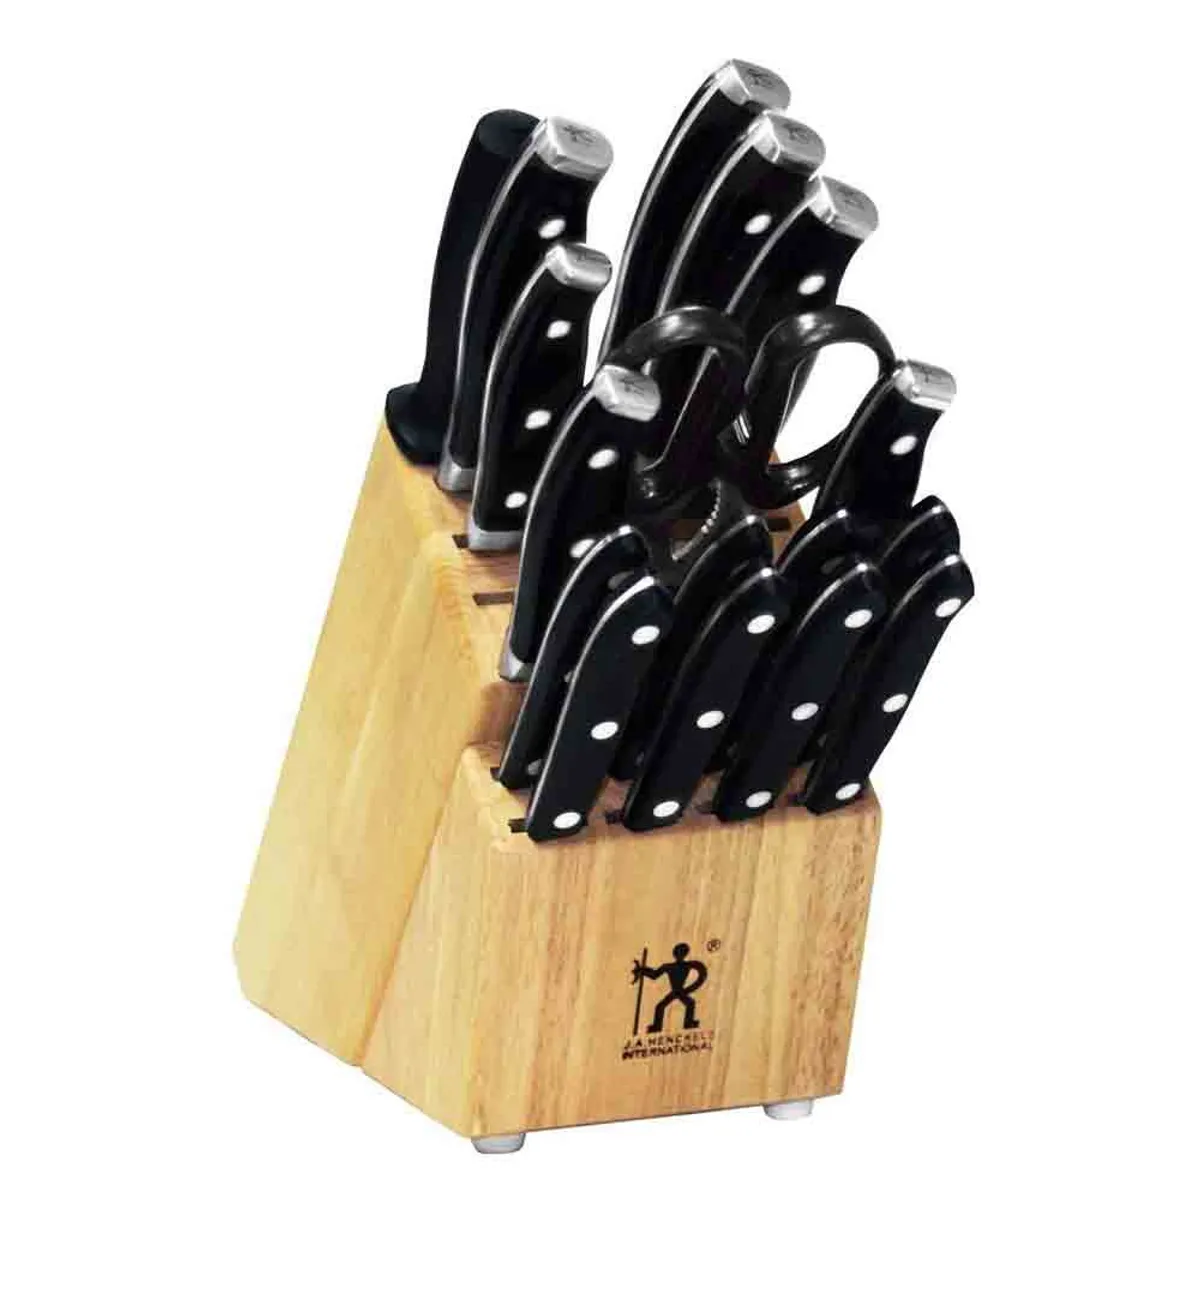 JA Henckels 18 Piece Kitchen Knife Set Review